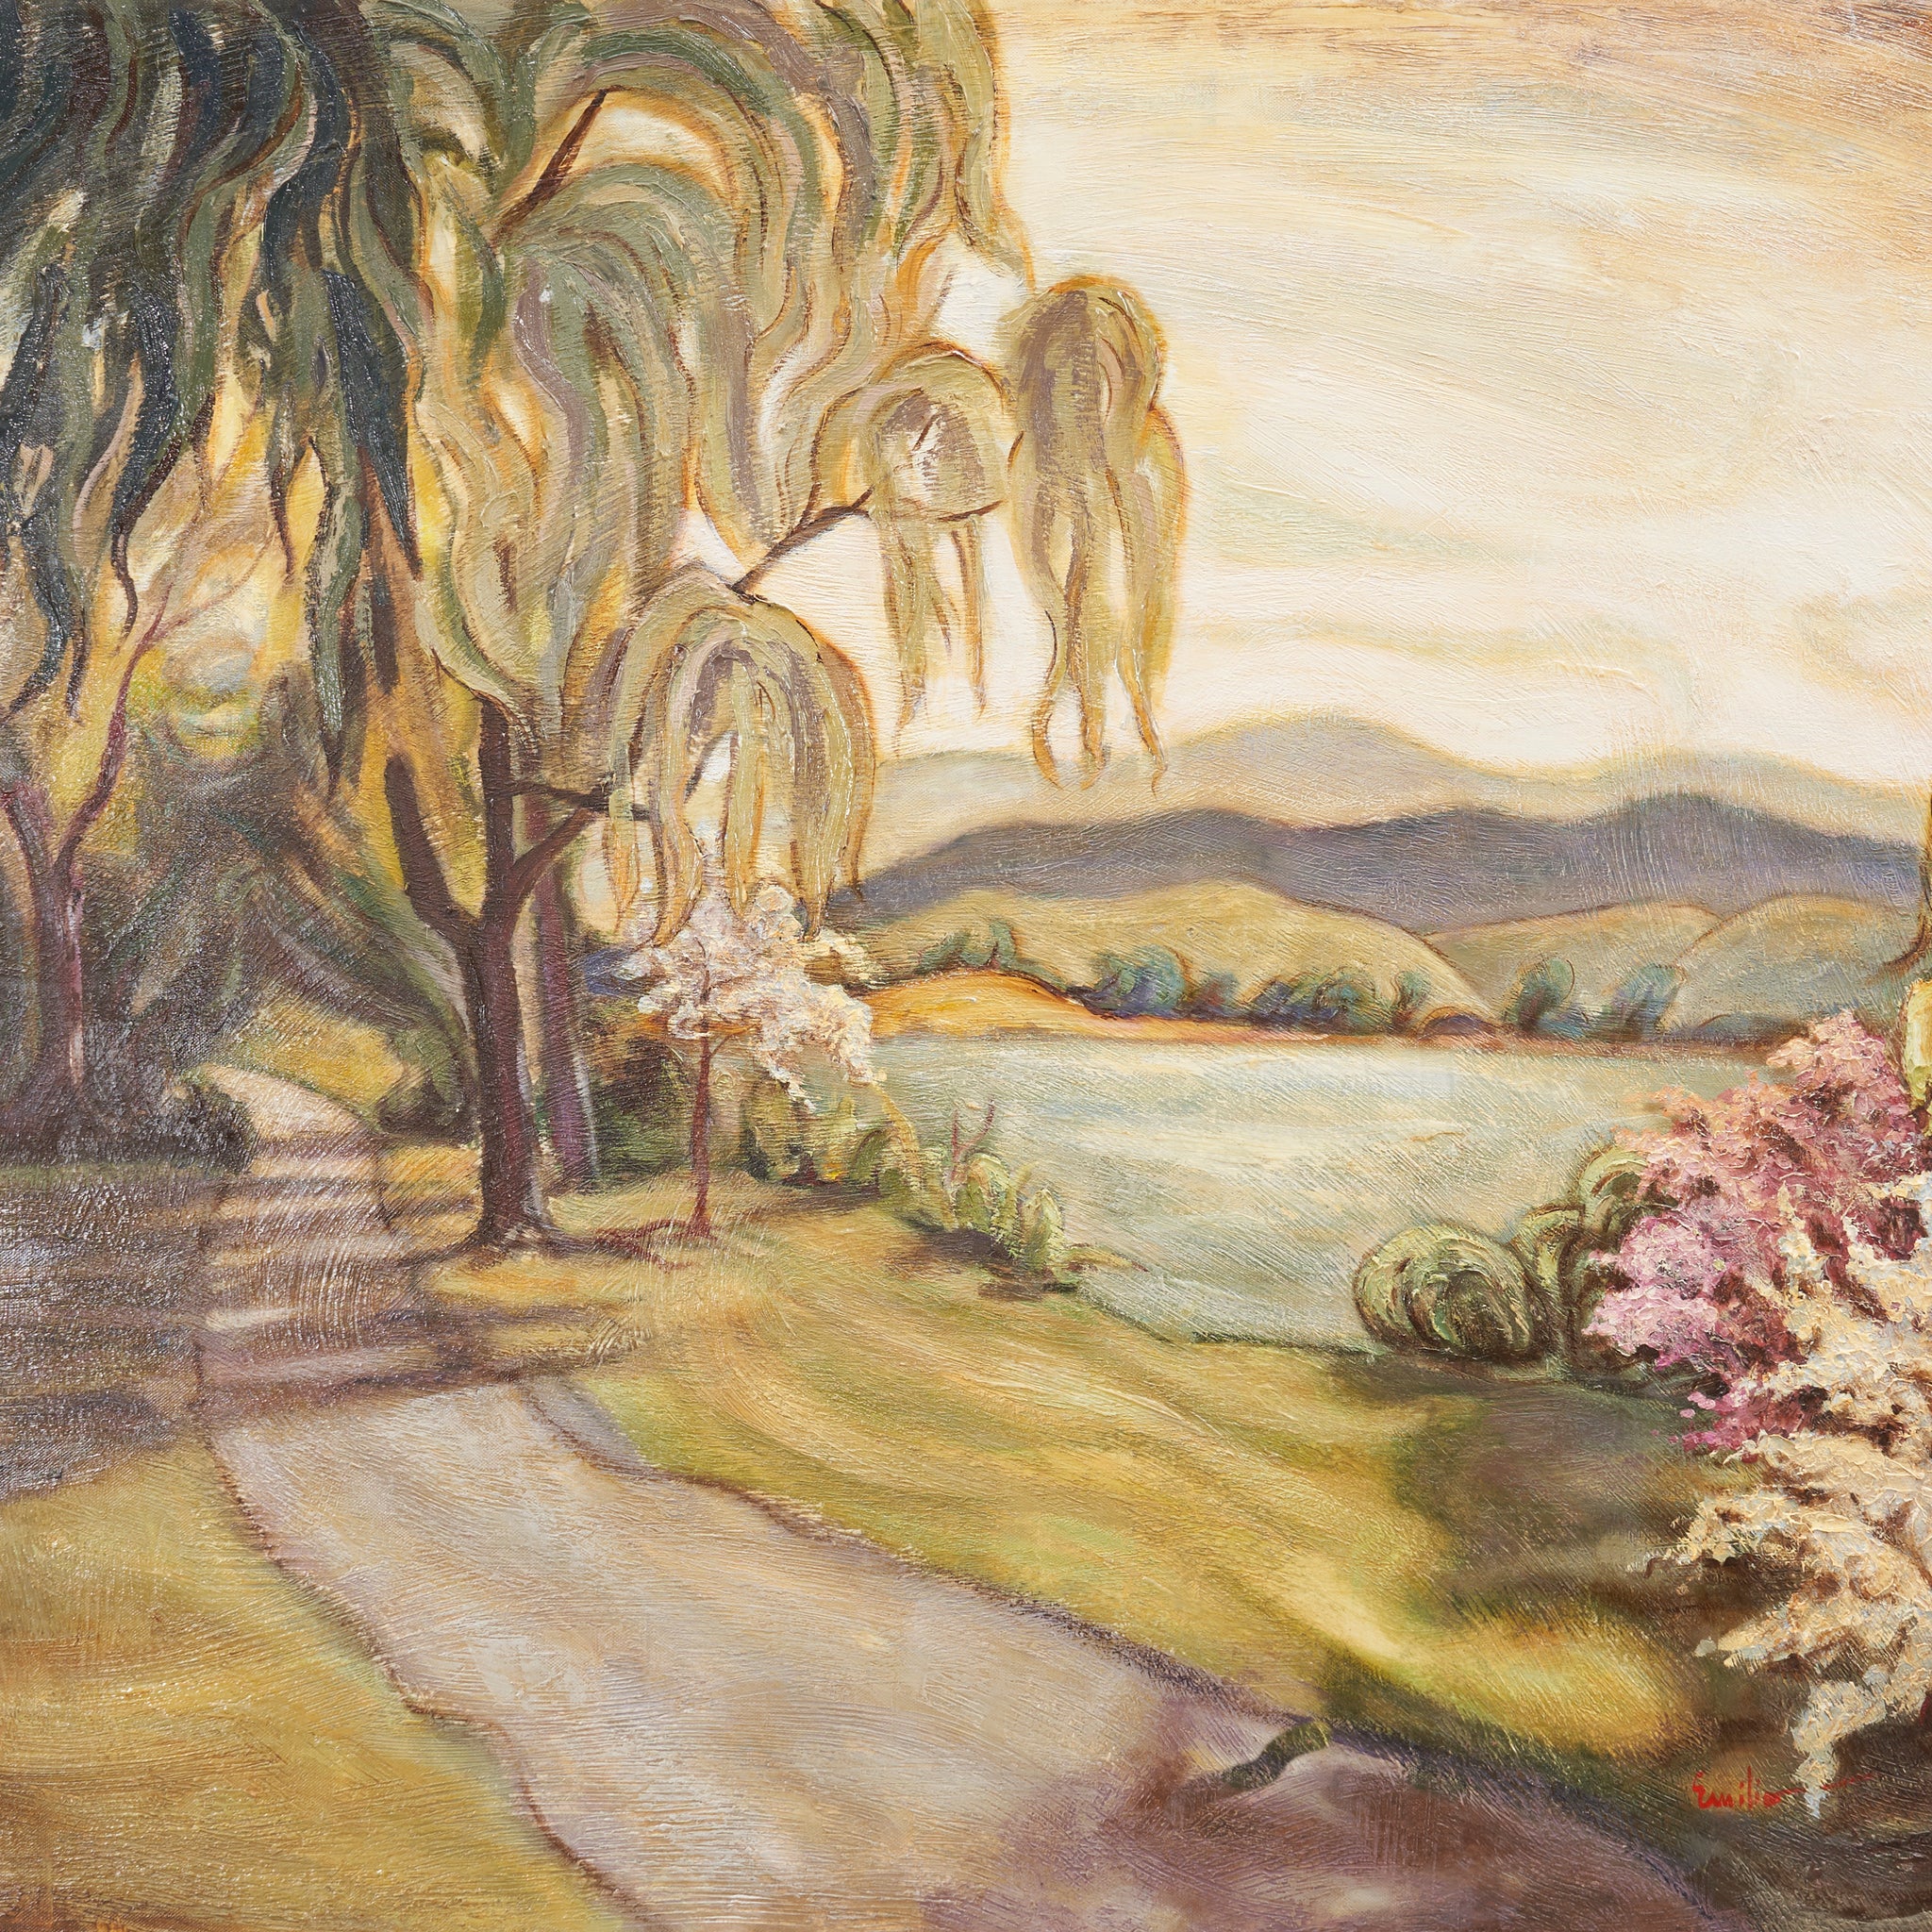 Oil on Canvas Landscape by Emilio Pica